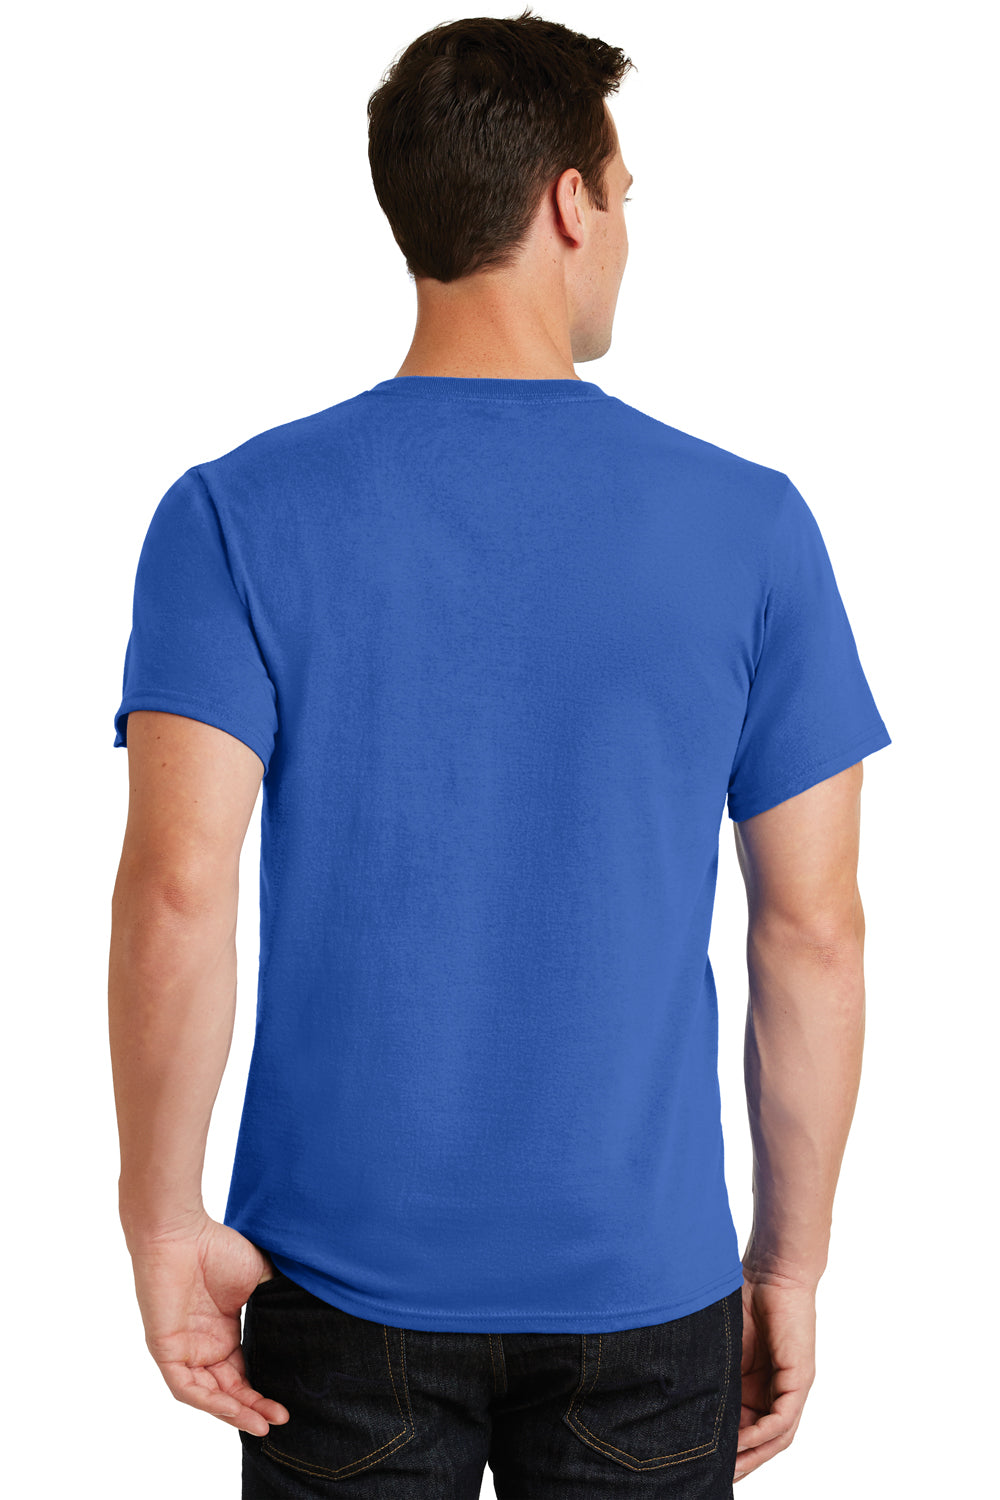 Port & Company PC61 Mens Essential Short Sleeve Crewneck T-Shirt Royal Blue Back